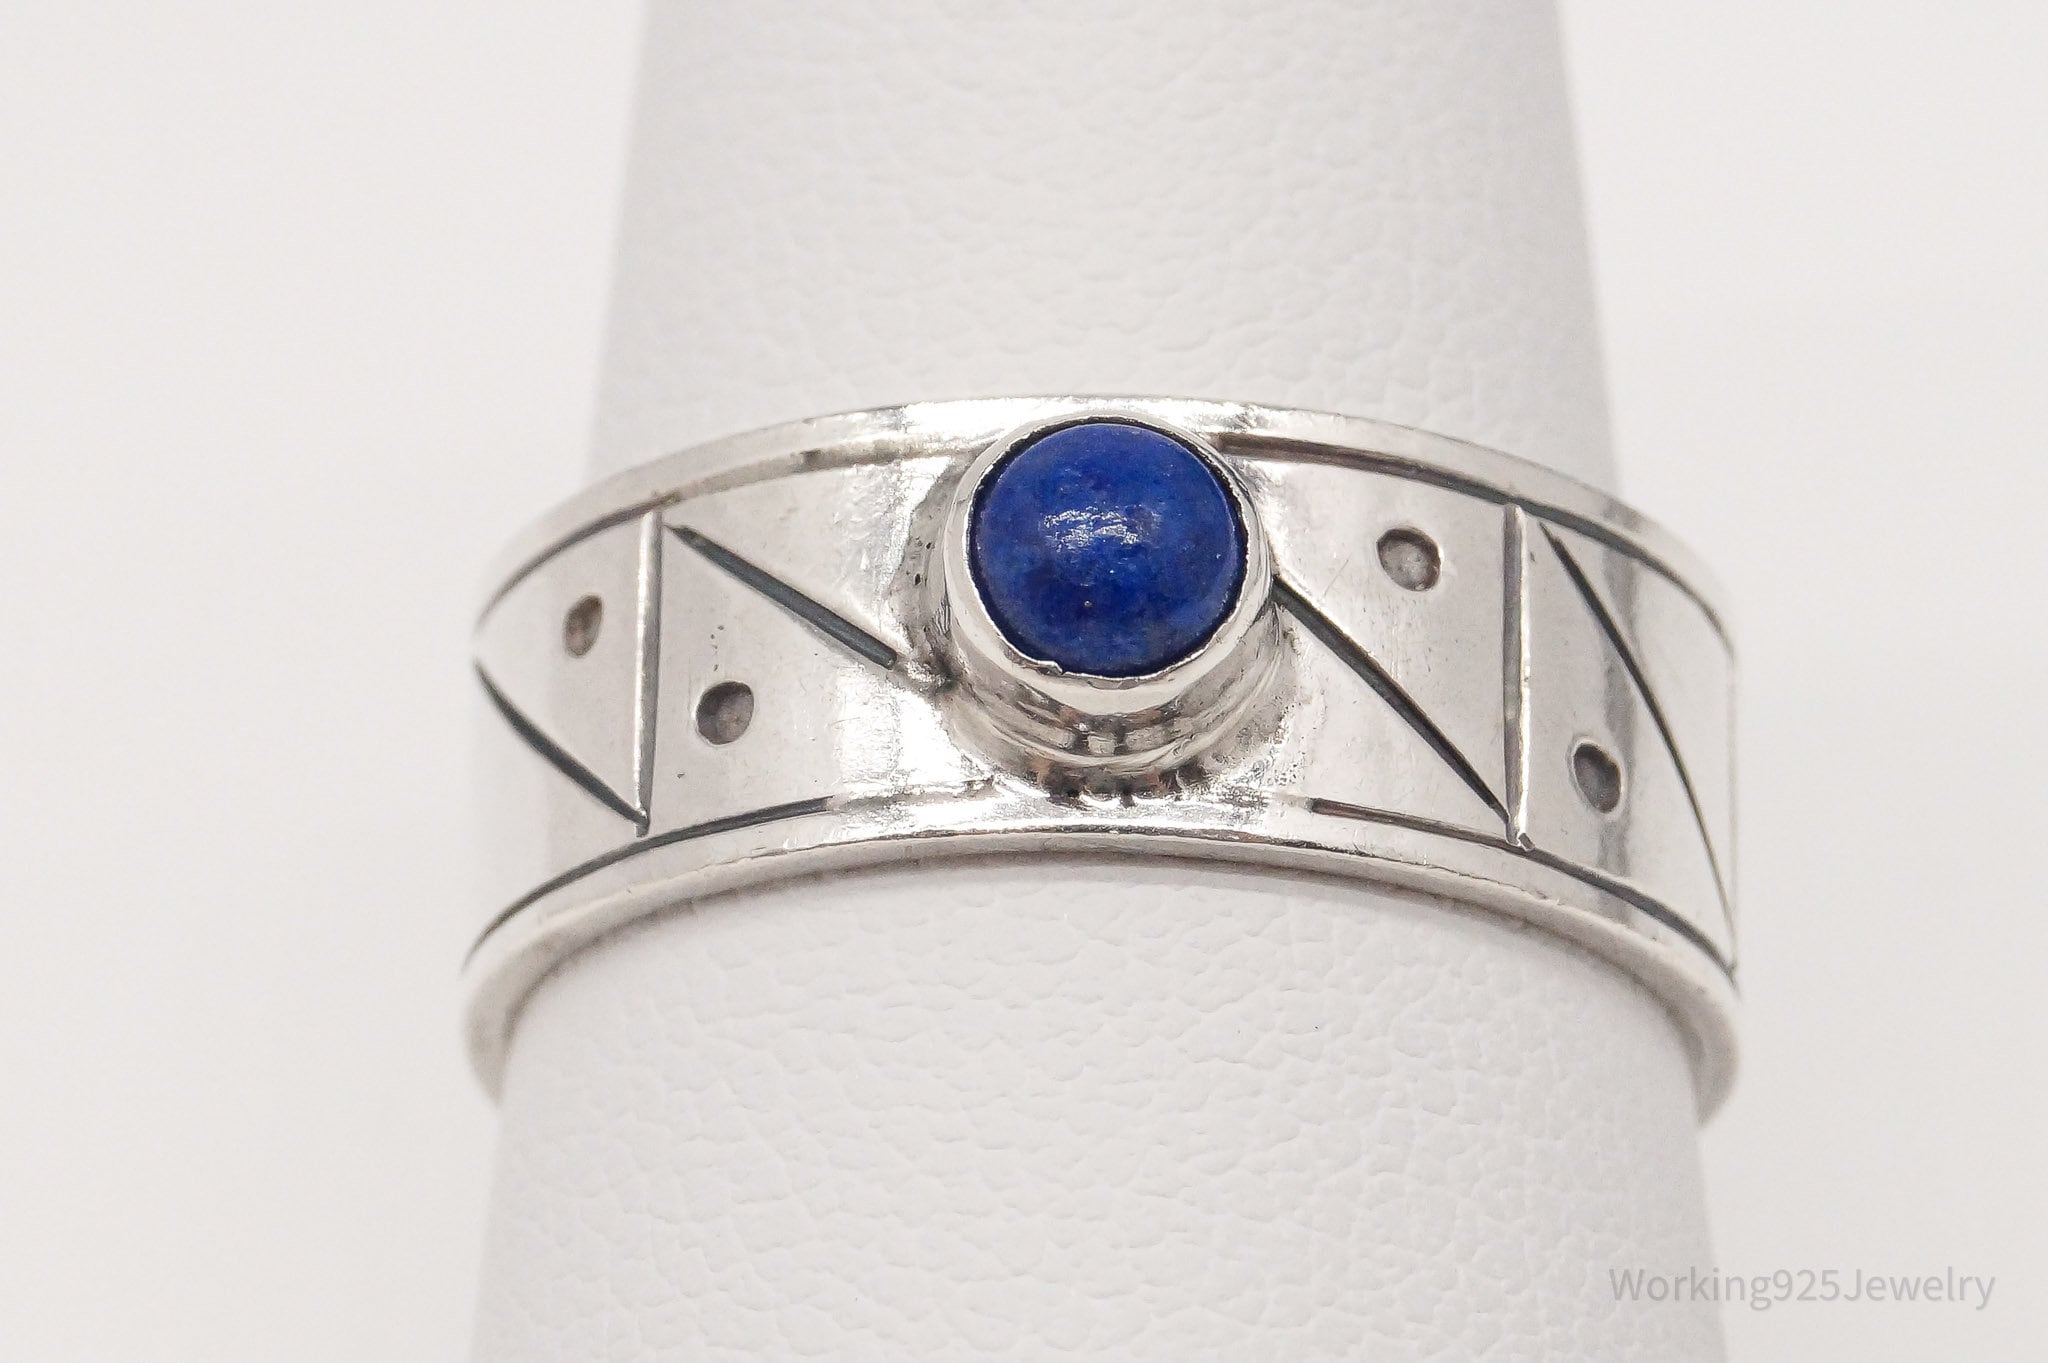 Vintage Lapis Lazuli Sterling Silver Ring - Size 8.5